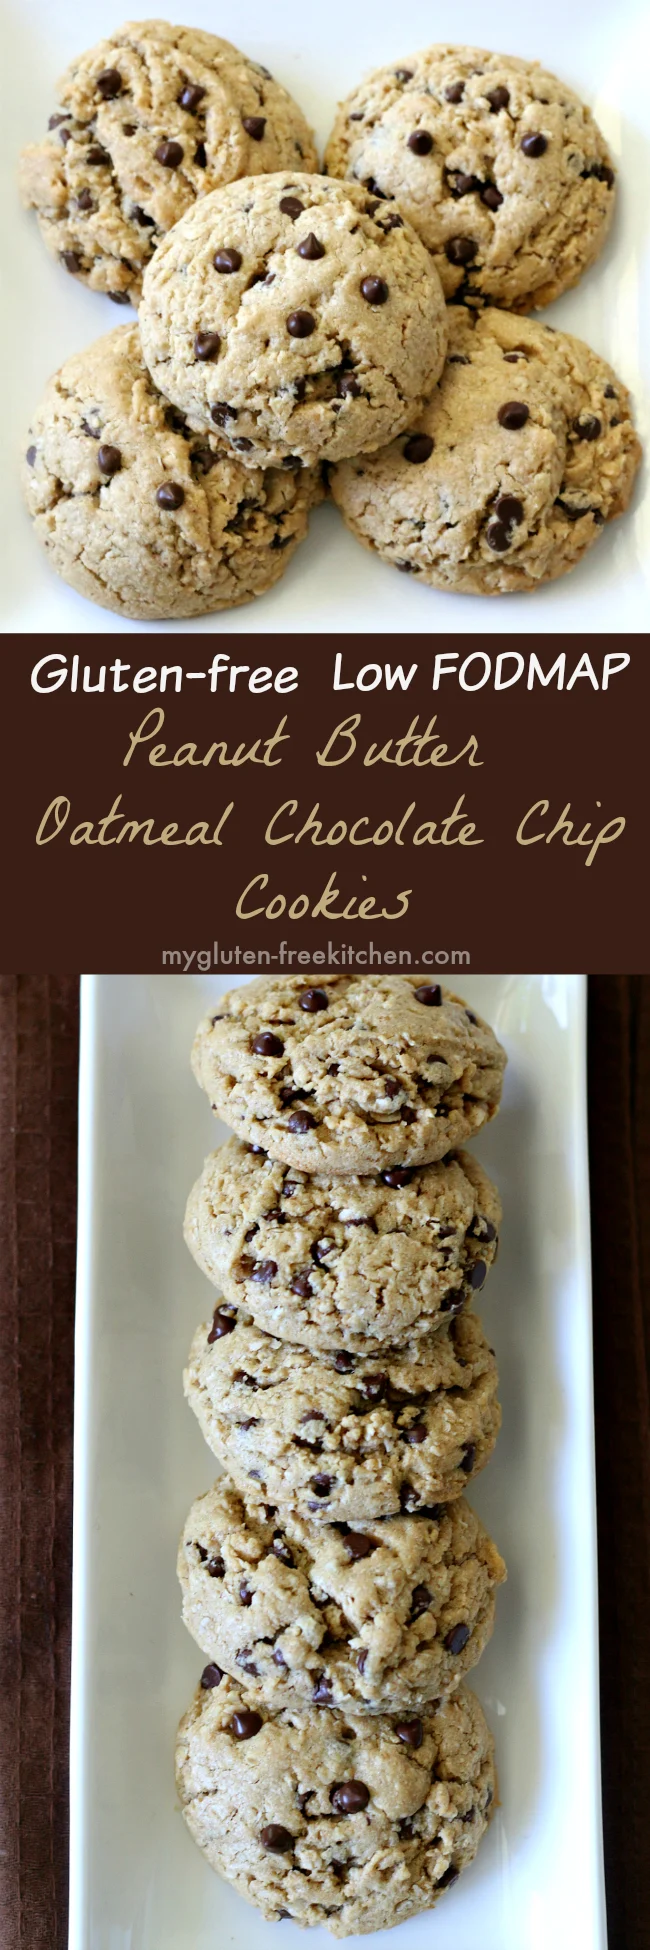 Gluten-free Low FODMAP Peanut Butter Oatmeal Chocolate Chip Cookies Recipe